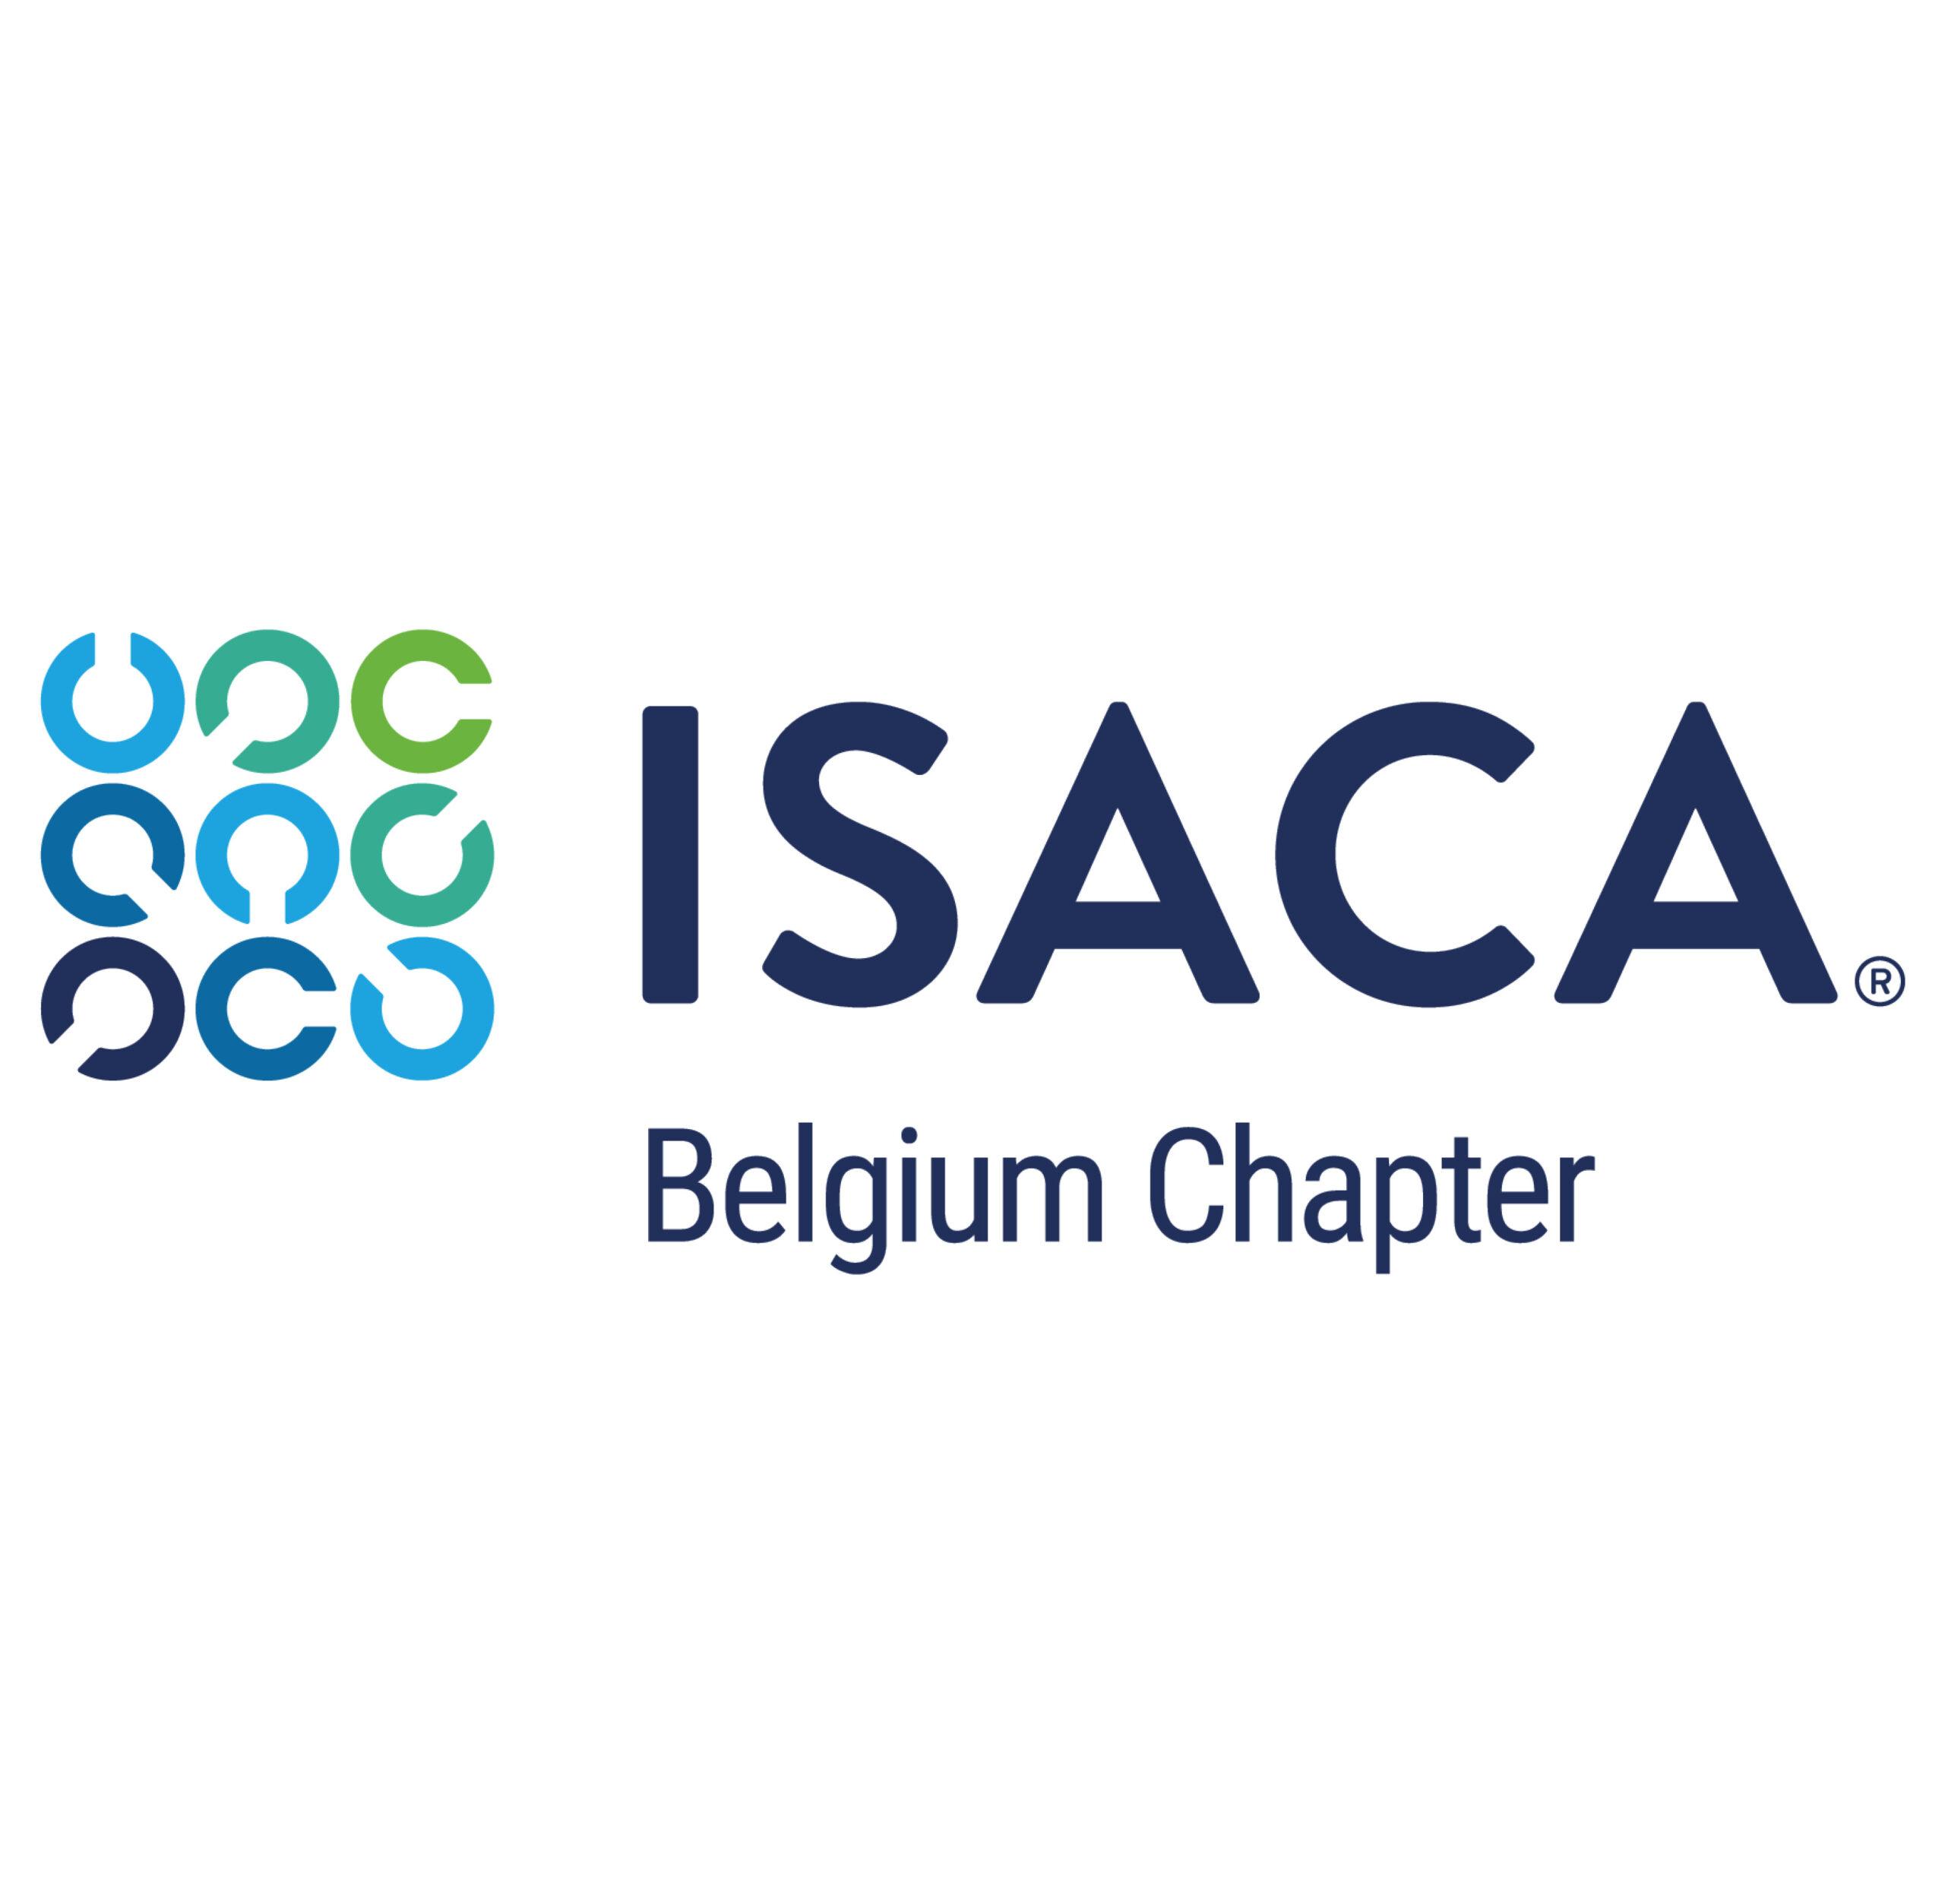 isaca iscf 3 scaled | Industrial Cybersec Forum,